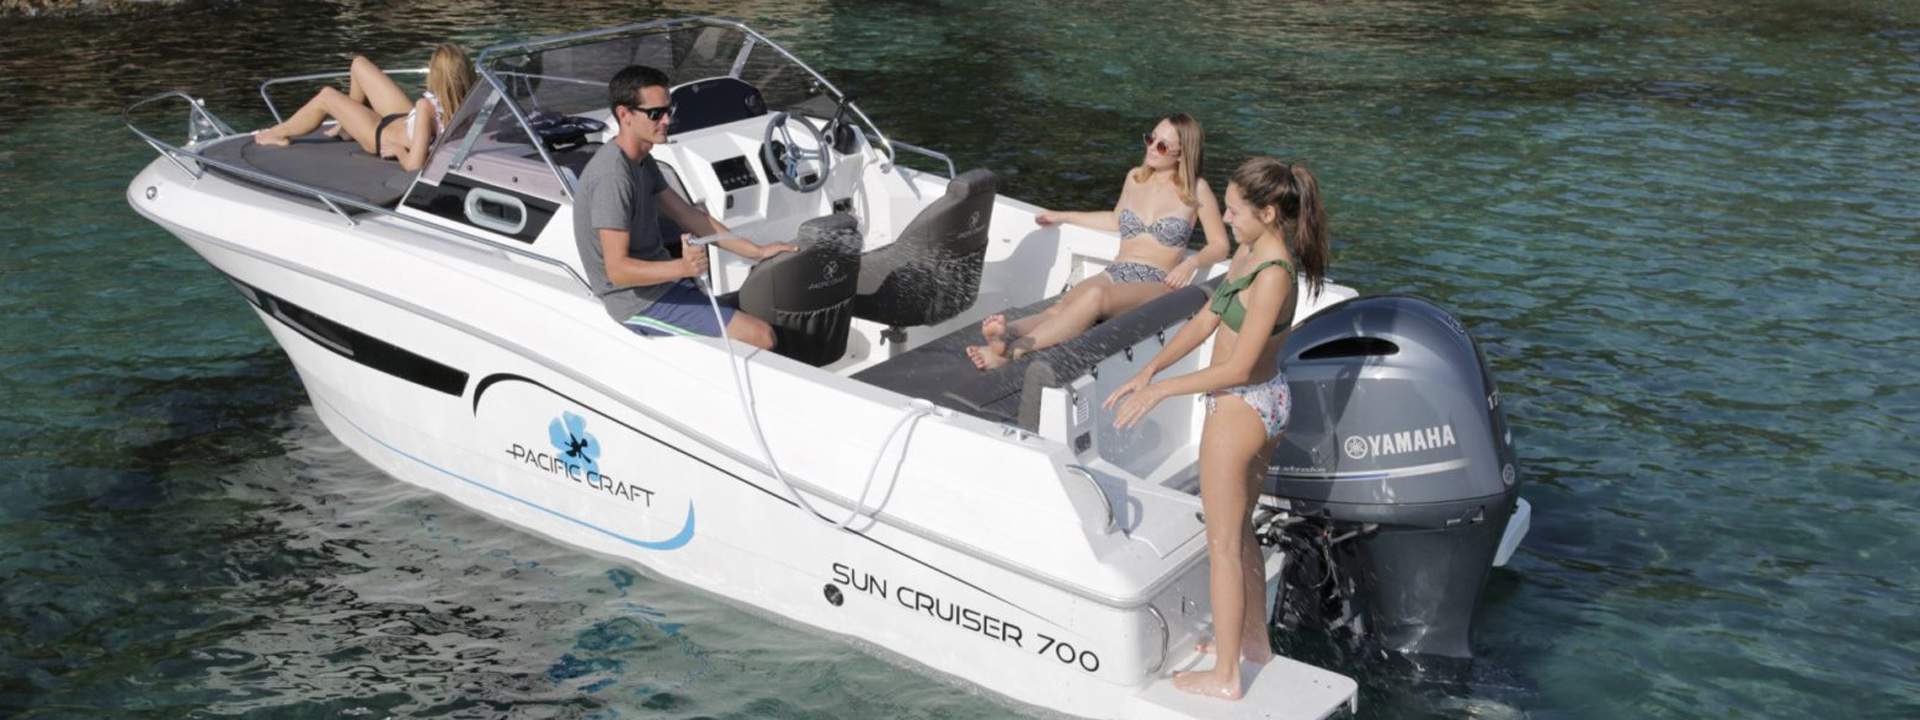 Barco a motor Pacific Craft 700 Sun Cruiser